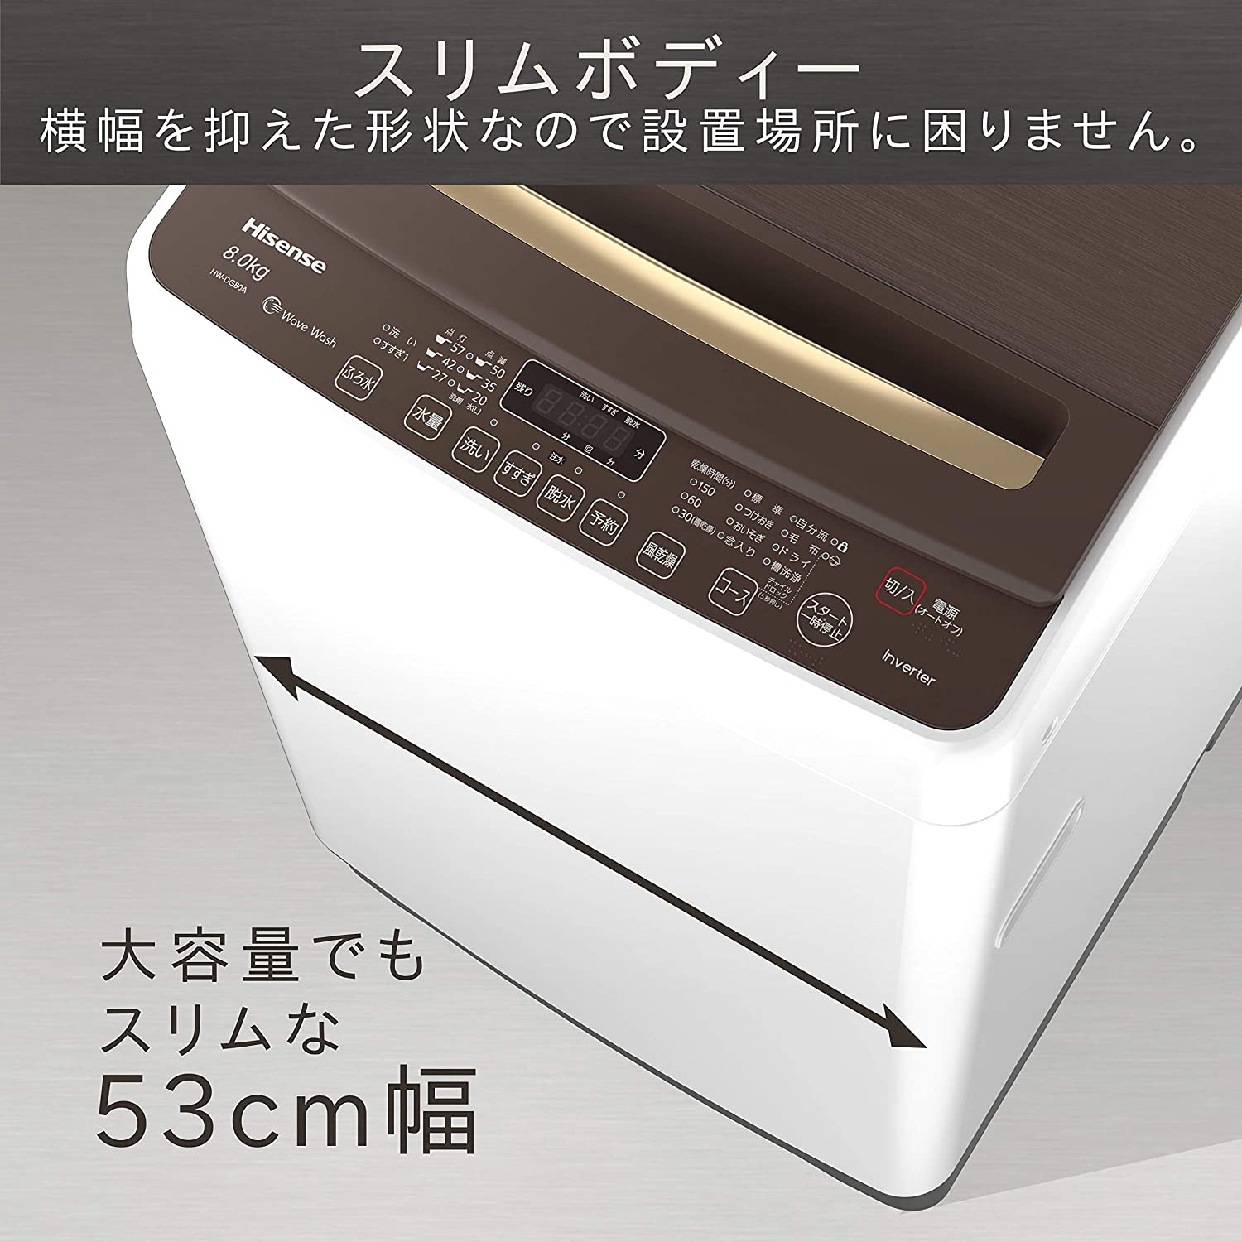 Hisense(ハイセンス) 全自動洗濯機 HW-DG80Aの商品画像5 